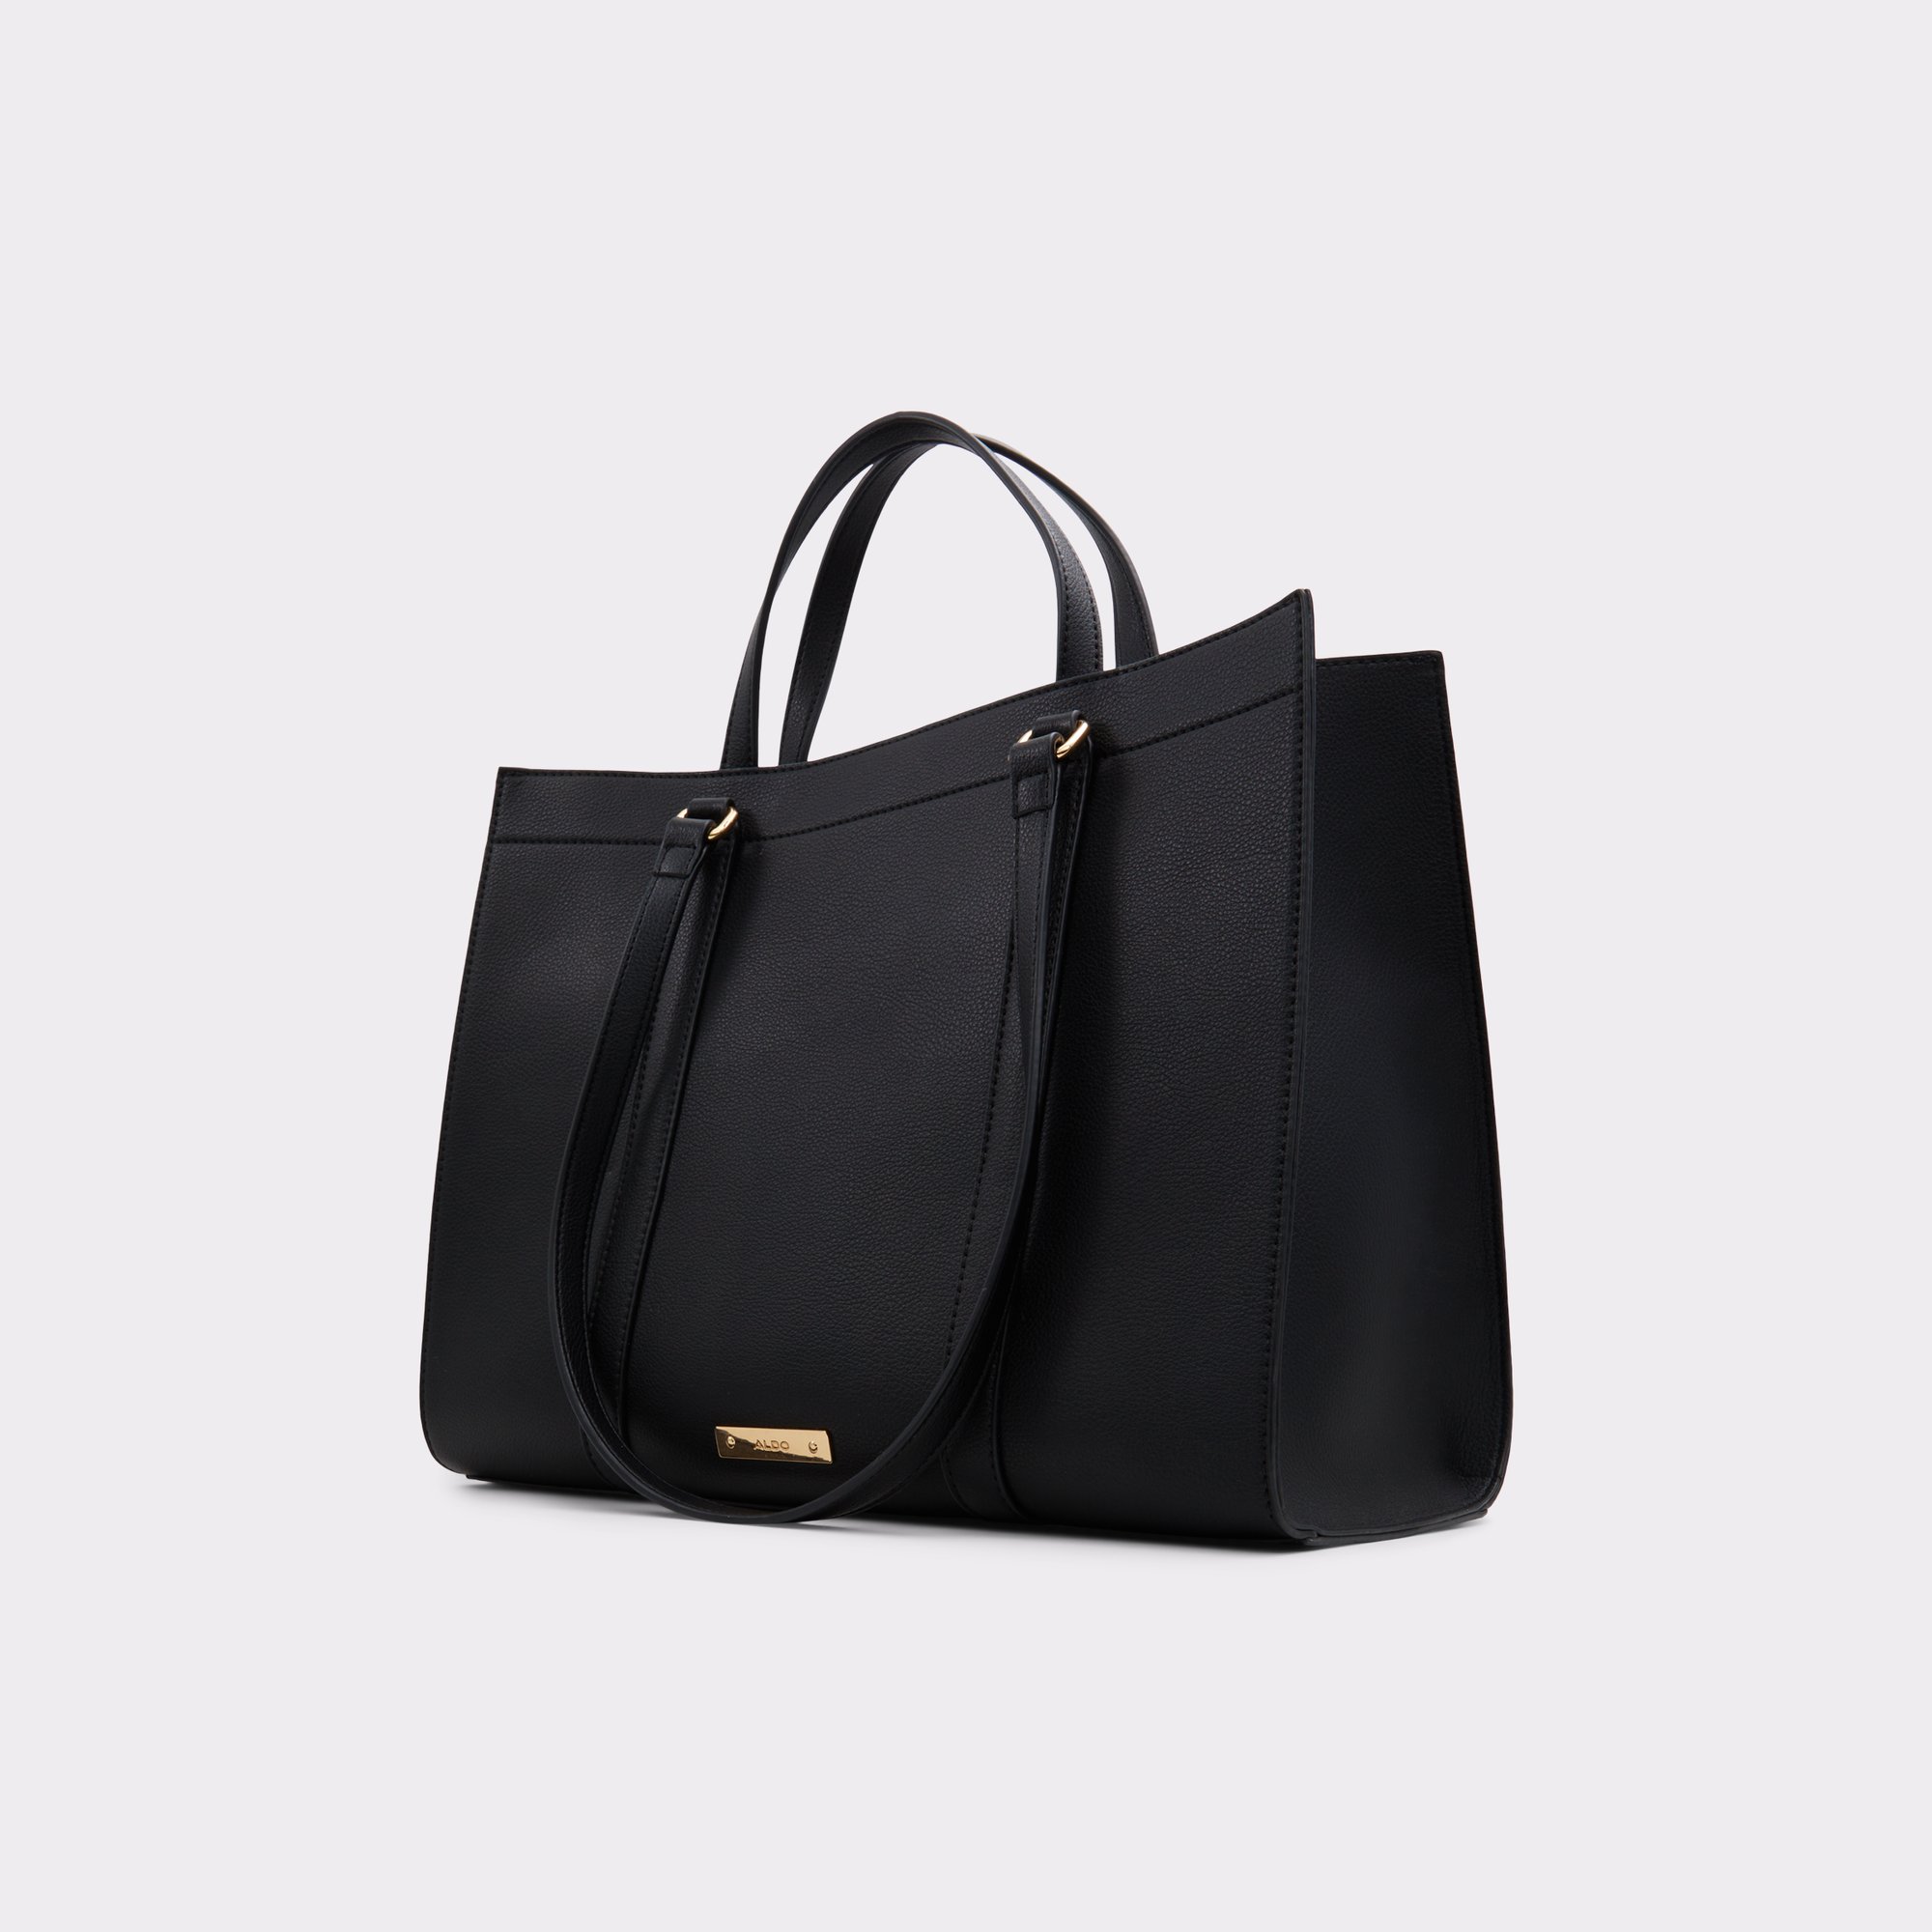 Bags from Aldo for Women in Black